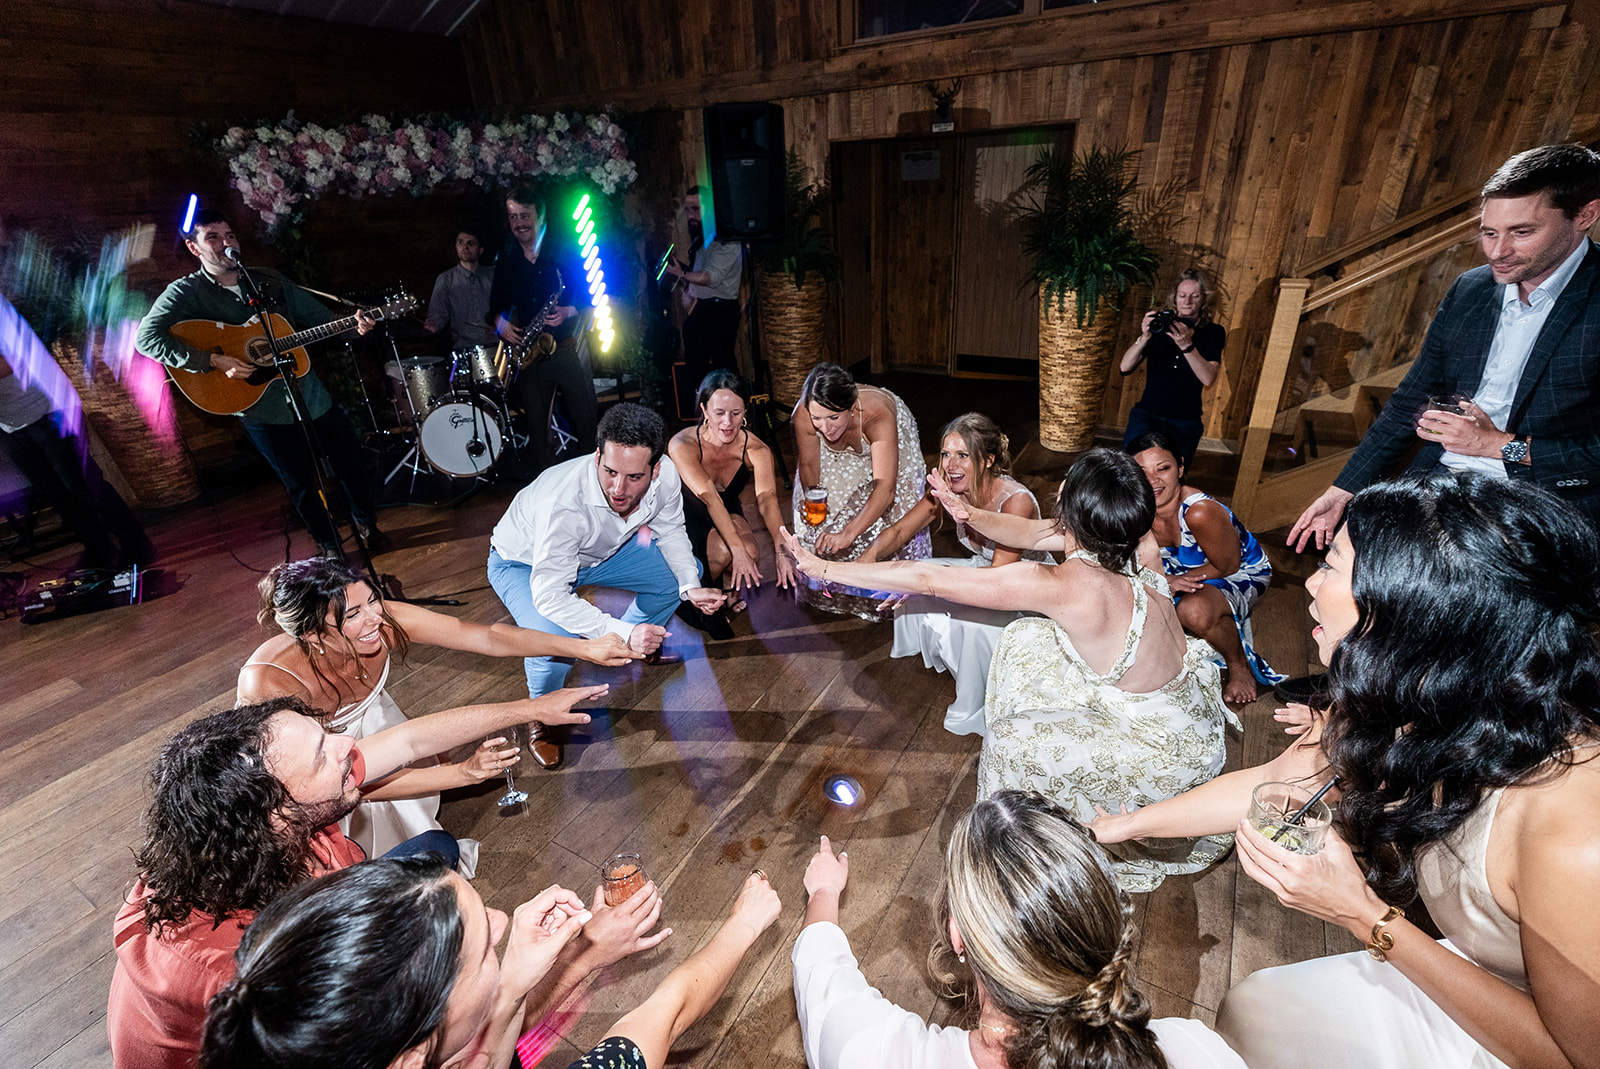 Wedding dancefloor fun at Woodstock weddings